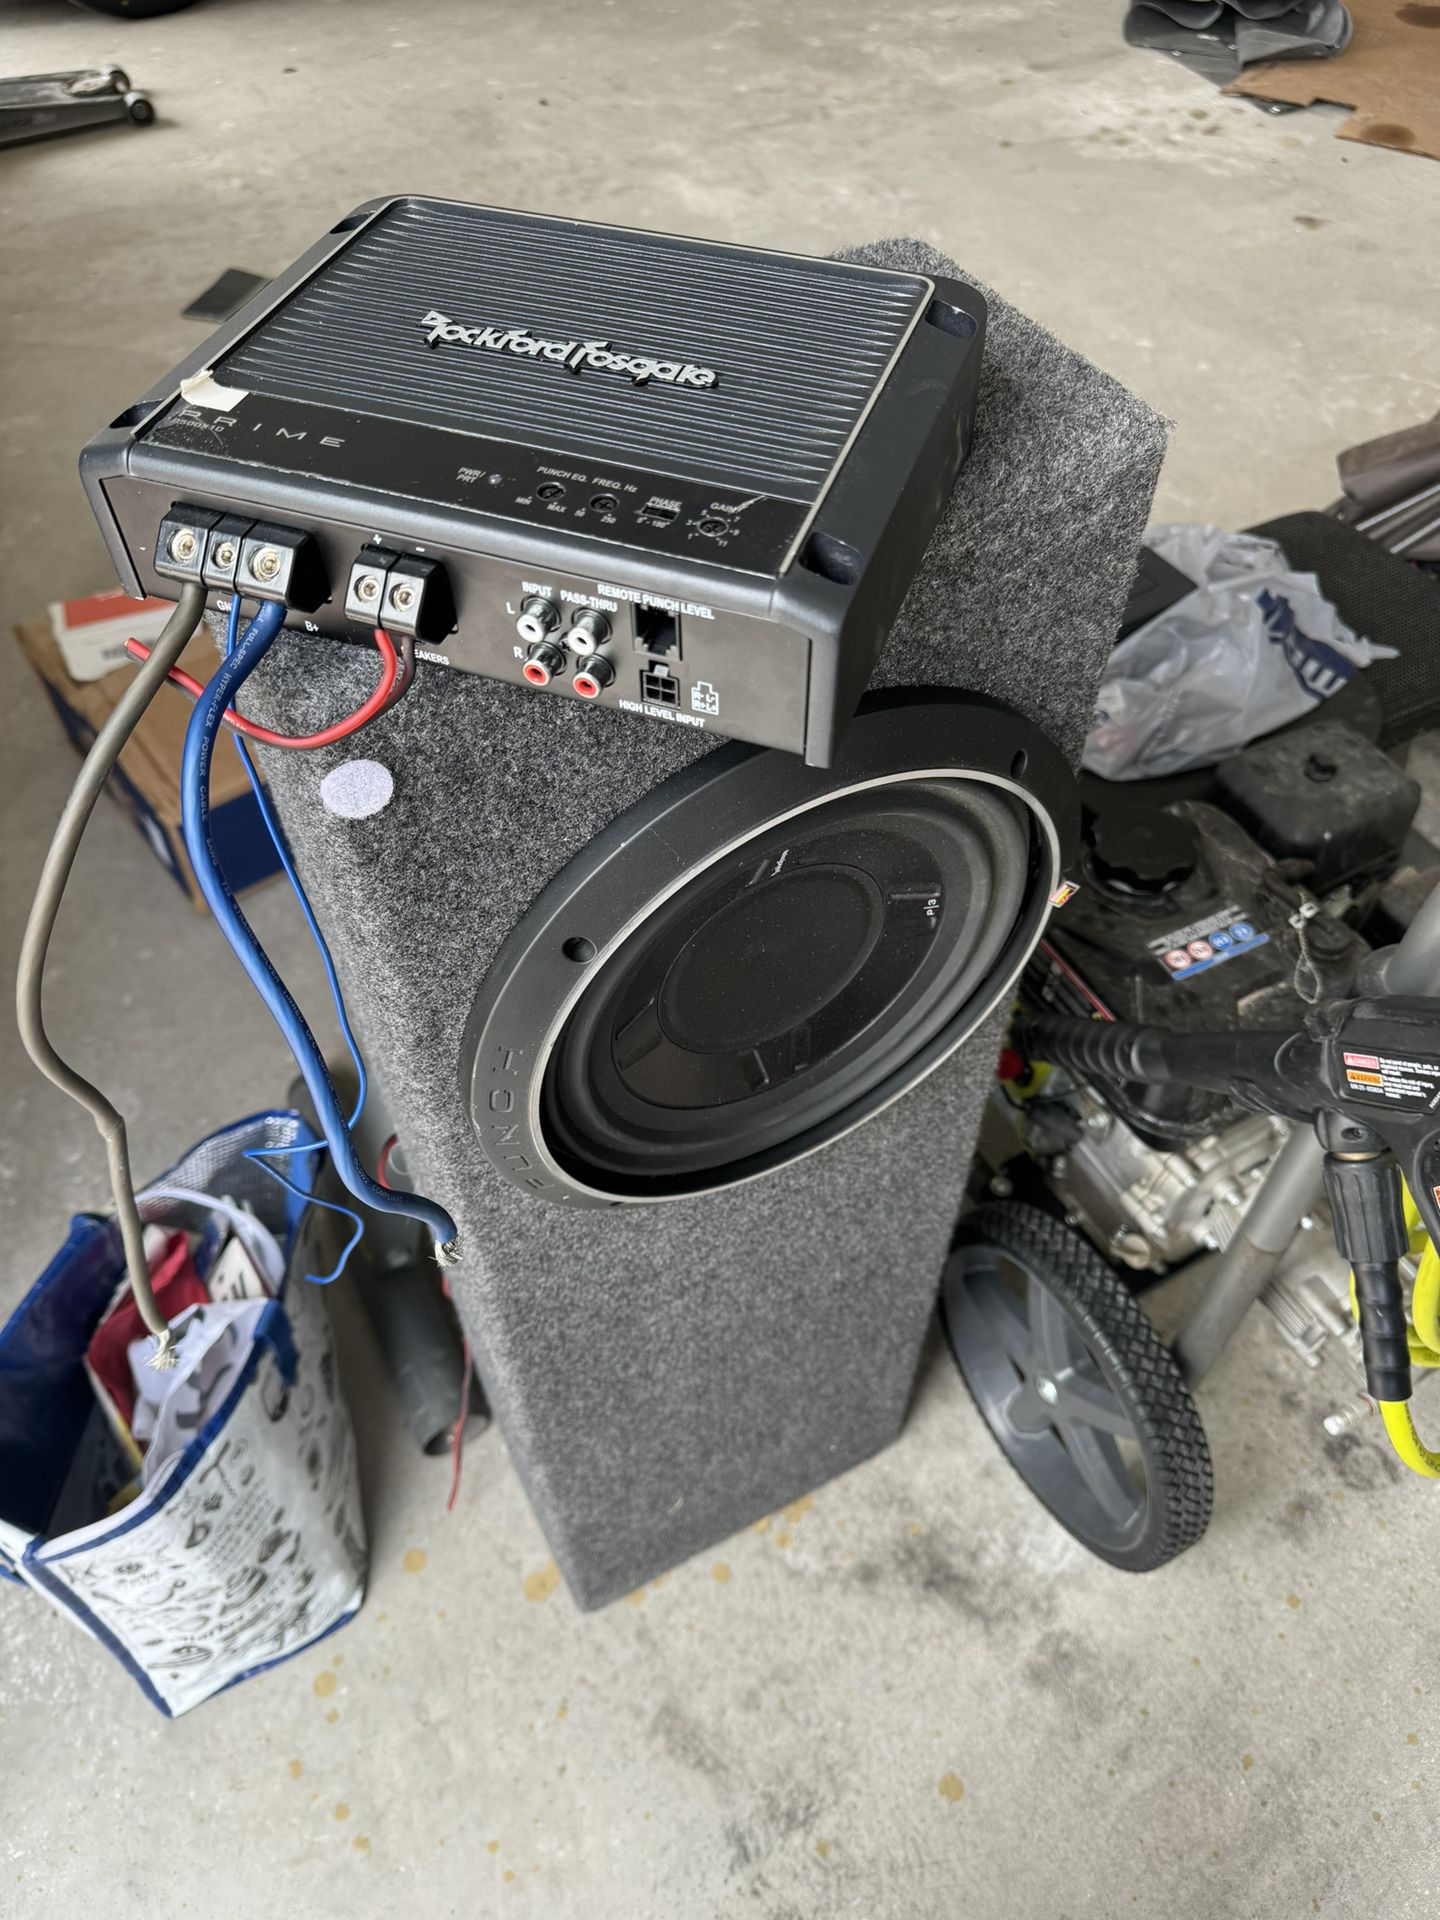 Rockford Fosgate 500 Watt Mono Amp & Custom Ported Enclosure With P3 10” Subs